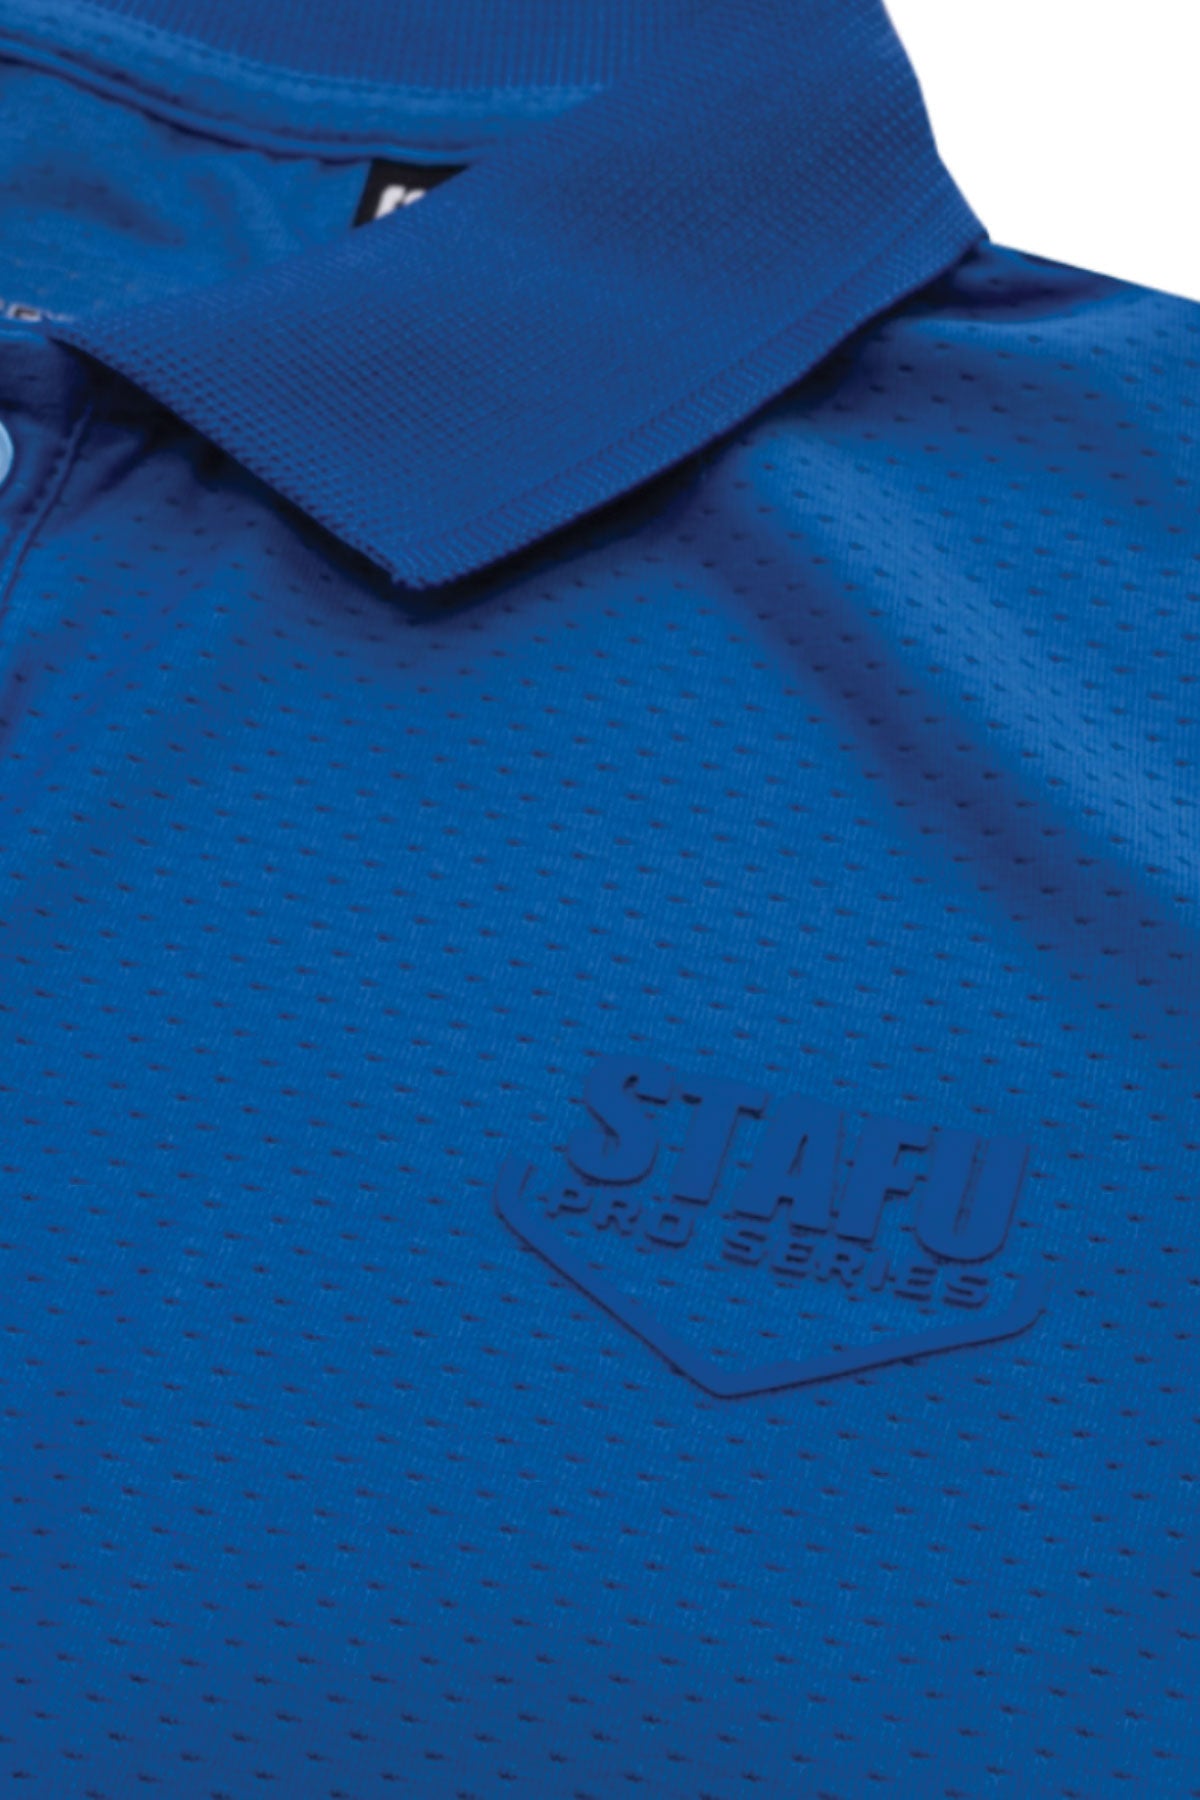 League Jr. Short Sleeve Polo Neck Shirt - Blue - Stafu Pro Series